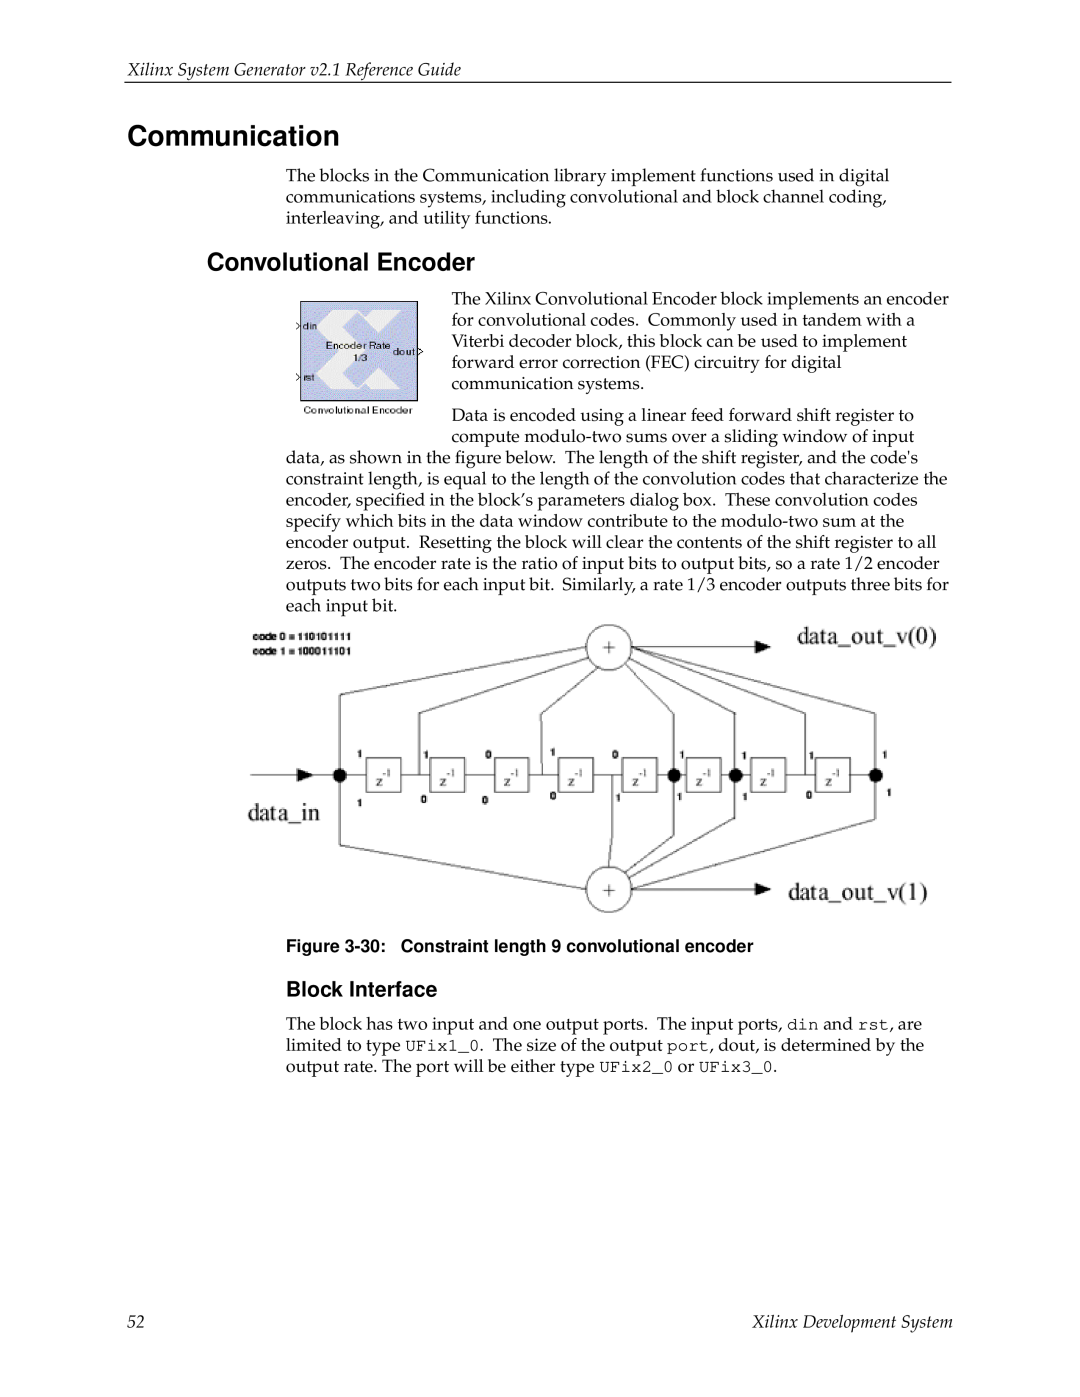 Xilinx V2.1 manual Communication, Convolutional Encoder, Block Interface, Xilinx System Generator v2.1 Reference Guide 